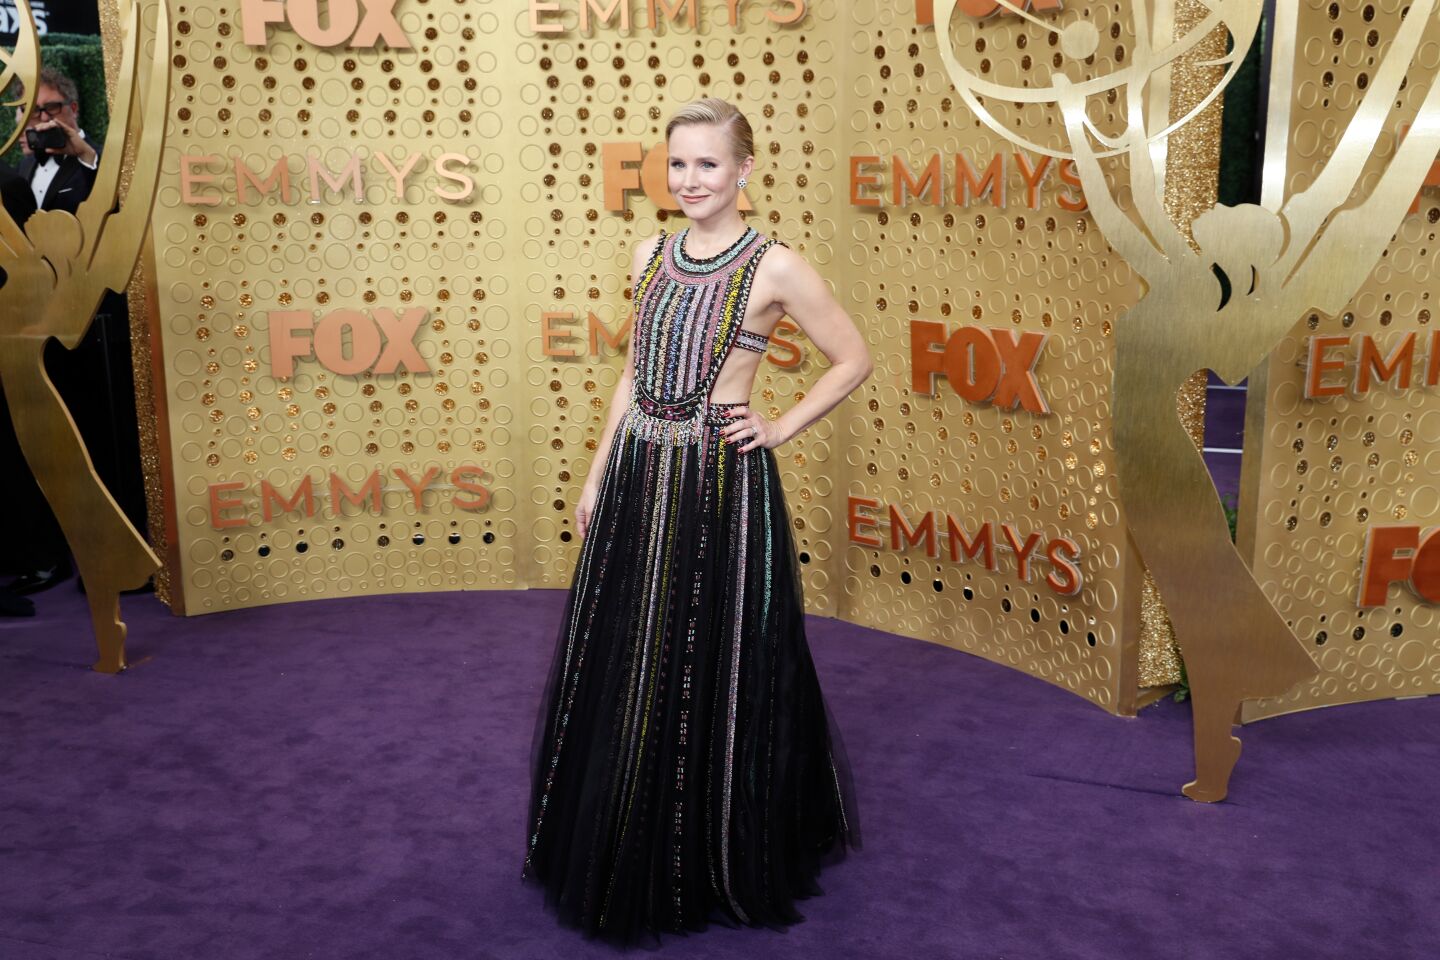 Emmys 2019 fashion hit